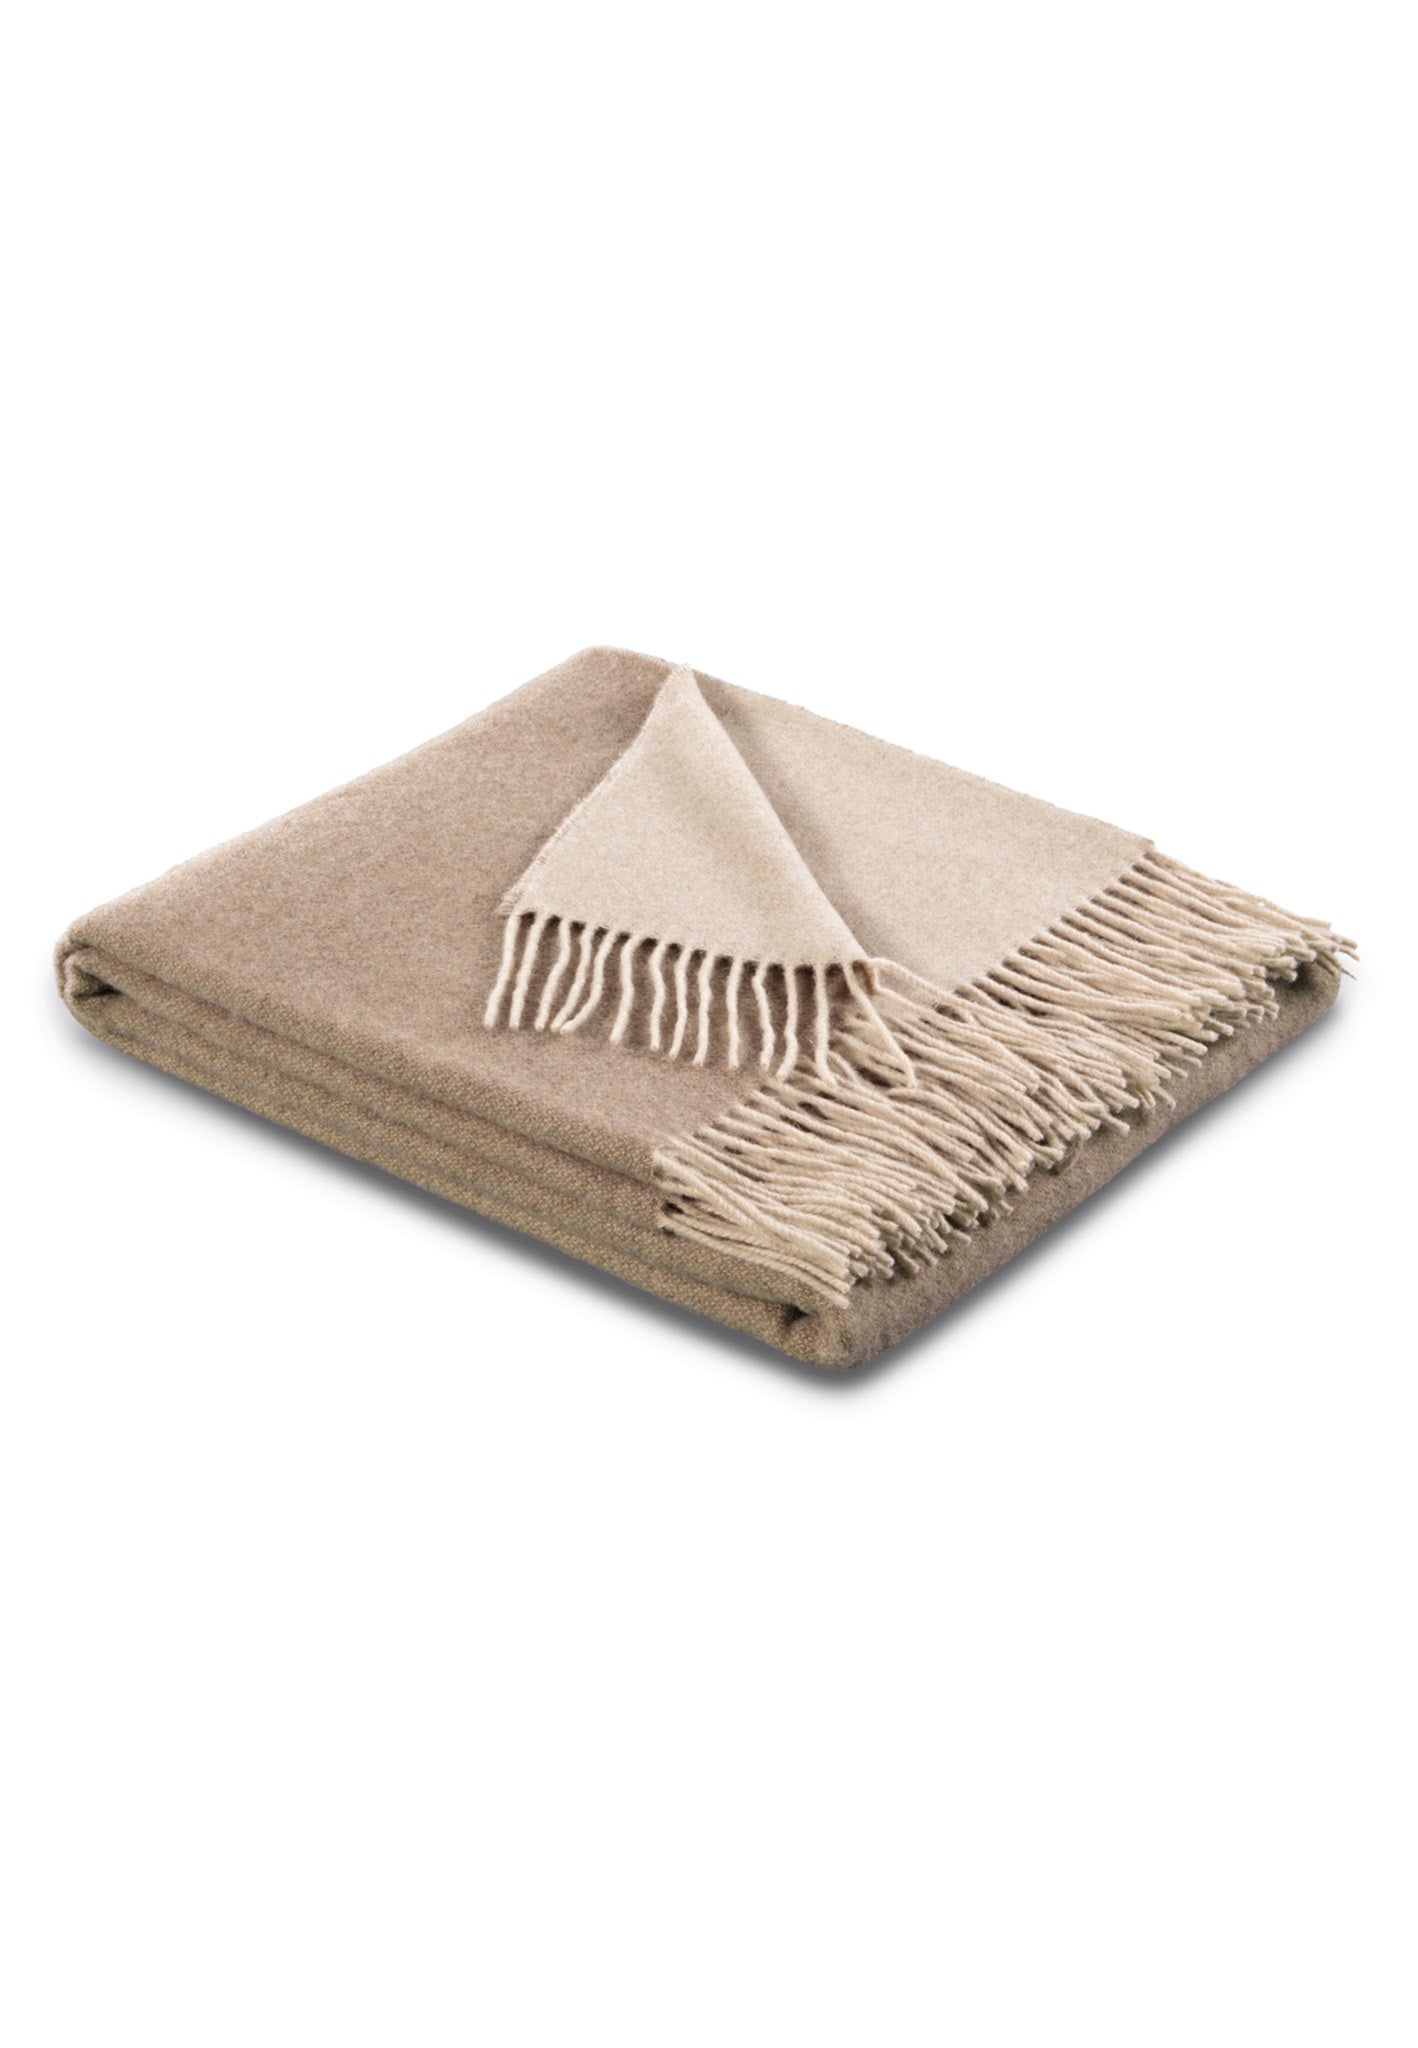 Fynch Hatton Kibo Cashere Plaid Blanket - Nature Sand